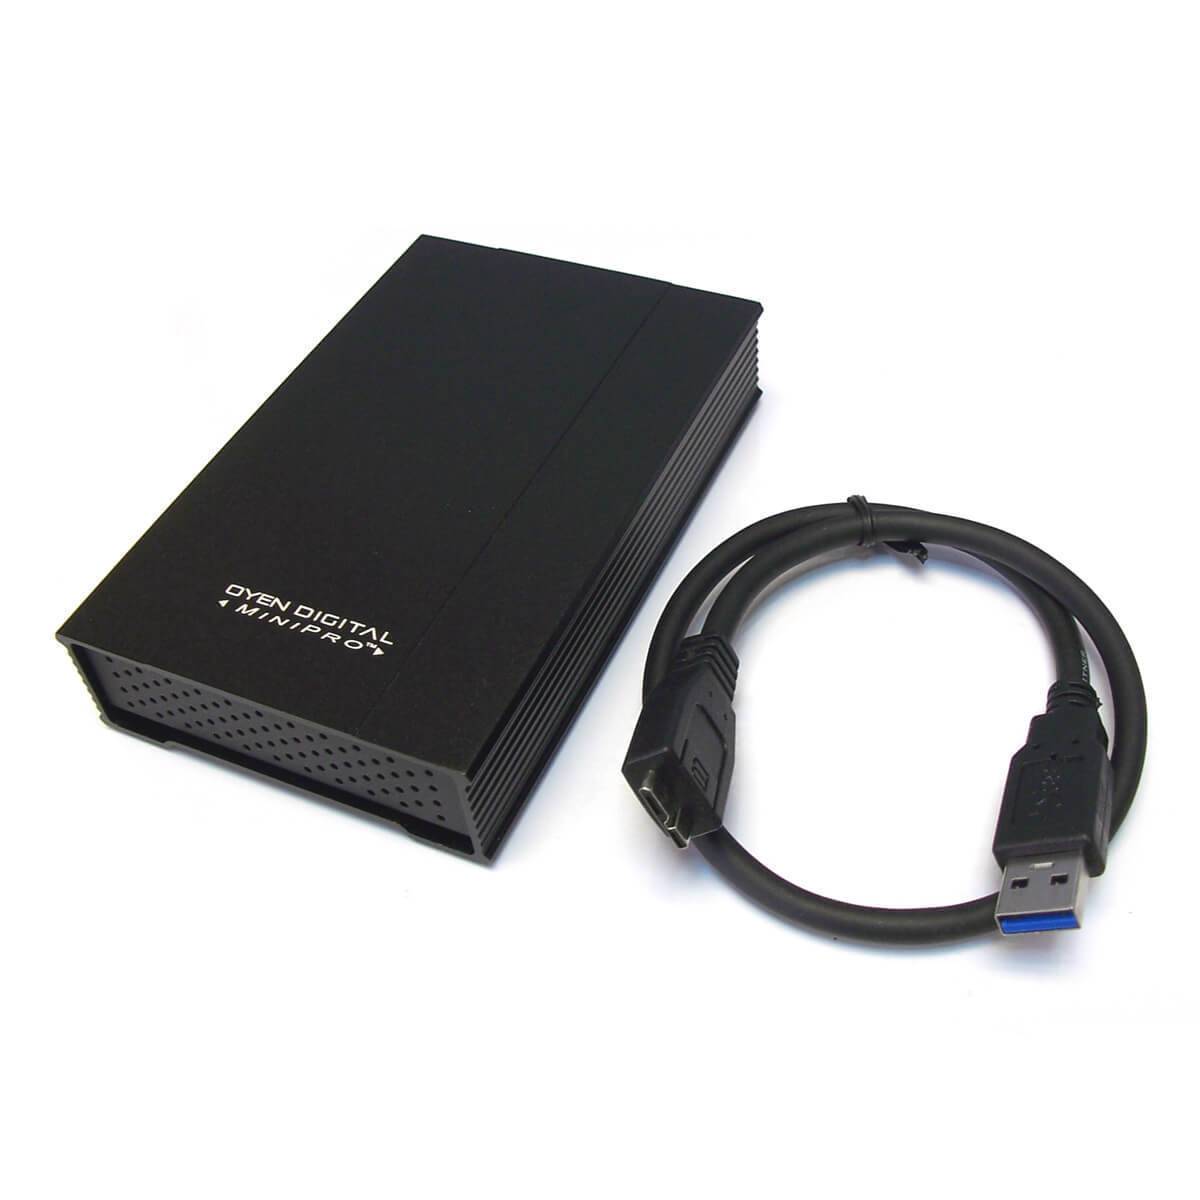 Oyen Digital MiniPro 2TB External USB 3.0 Portable Hard Drive